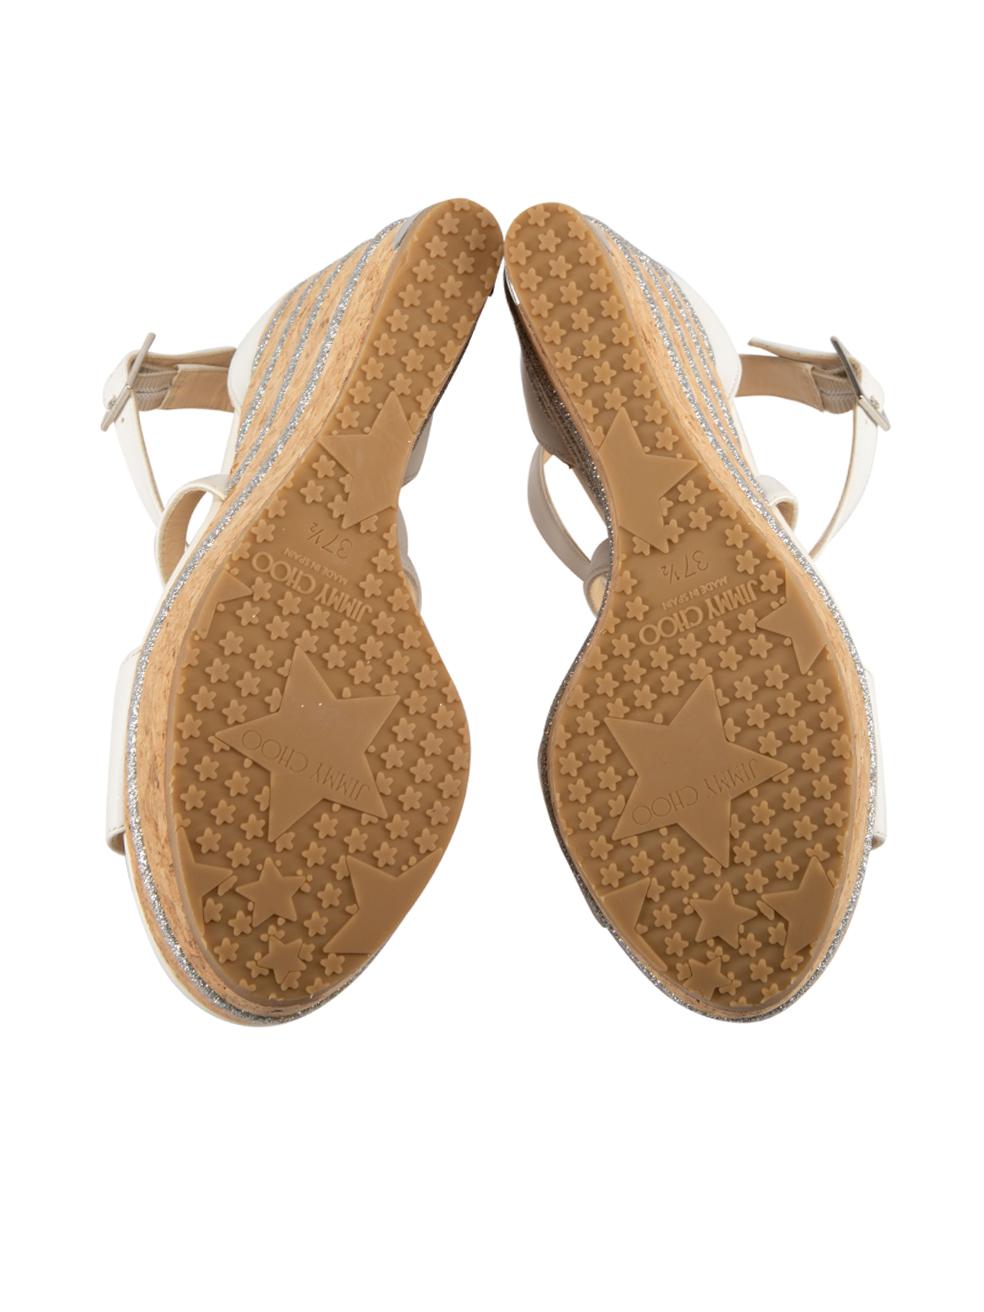 Women's Jimmy Choo White Leather Glitter Wedge Sandals Size IT 37.5